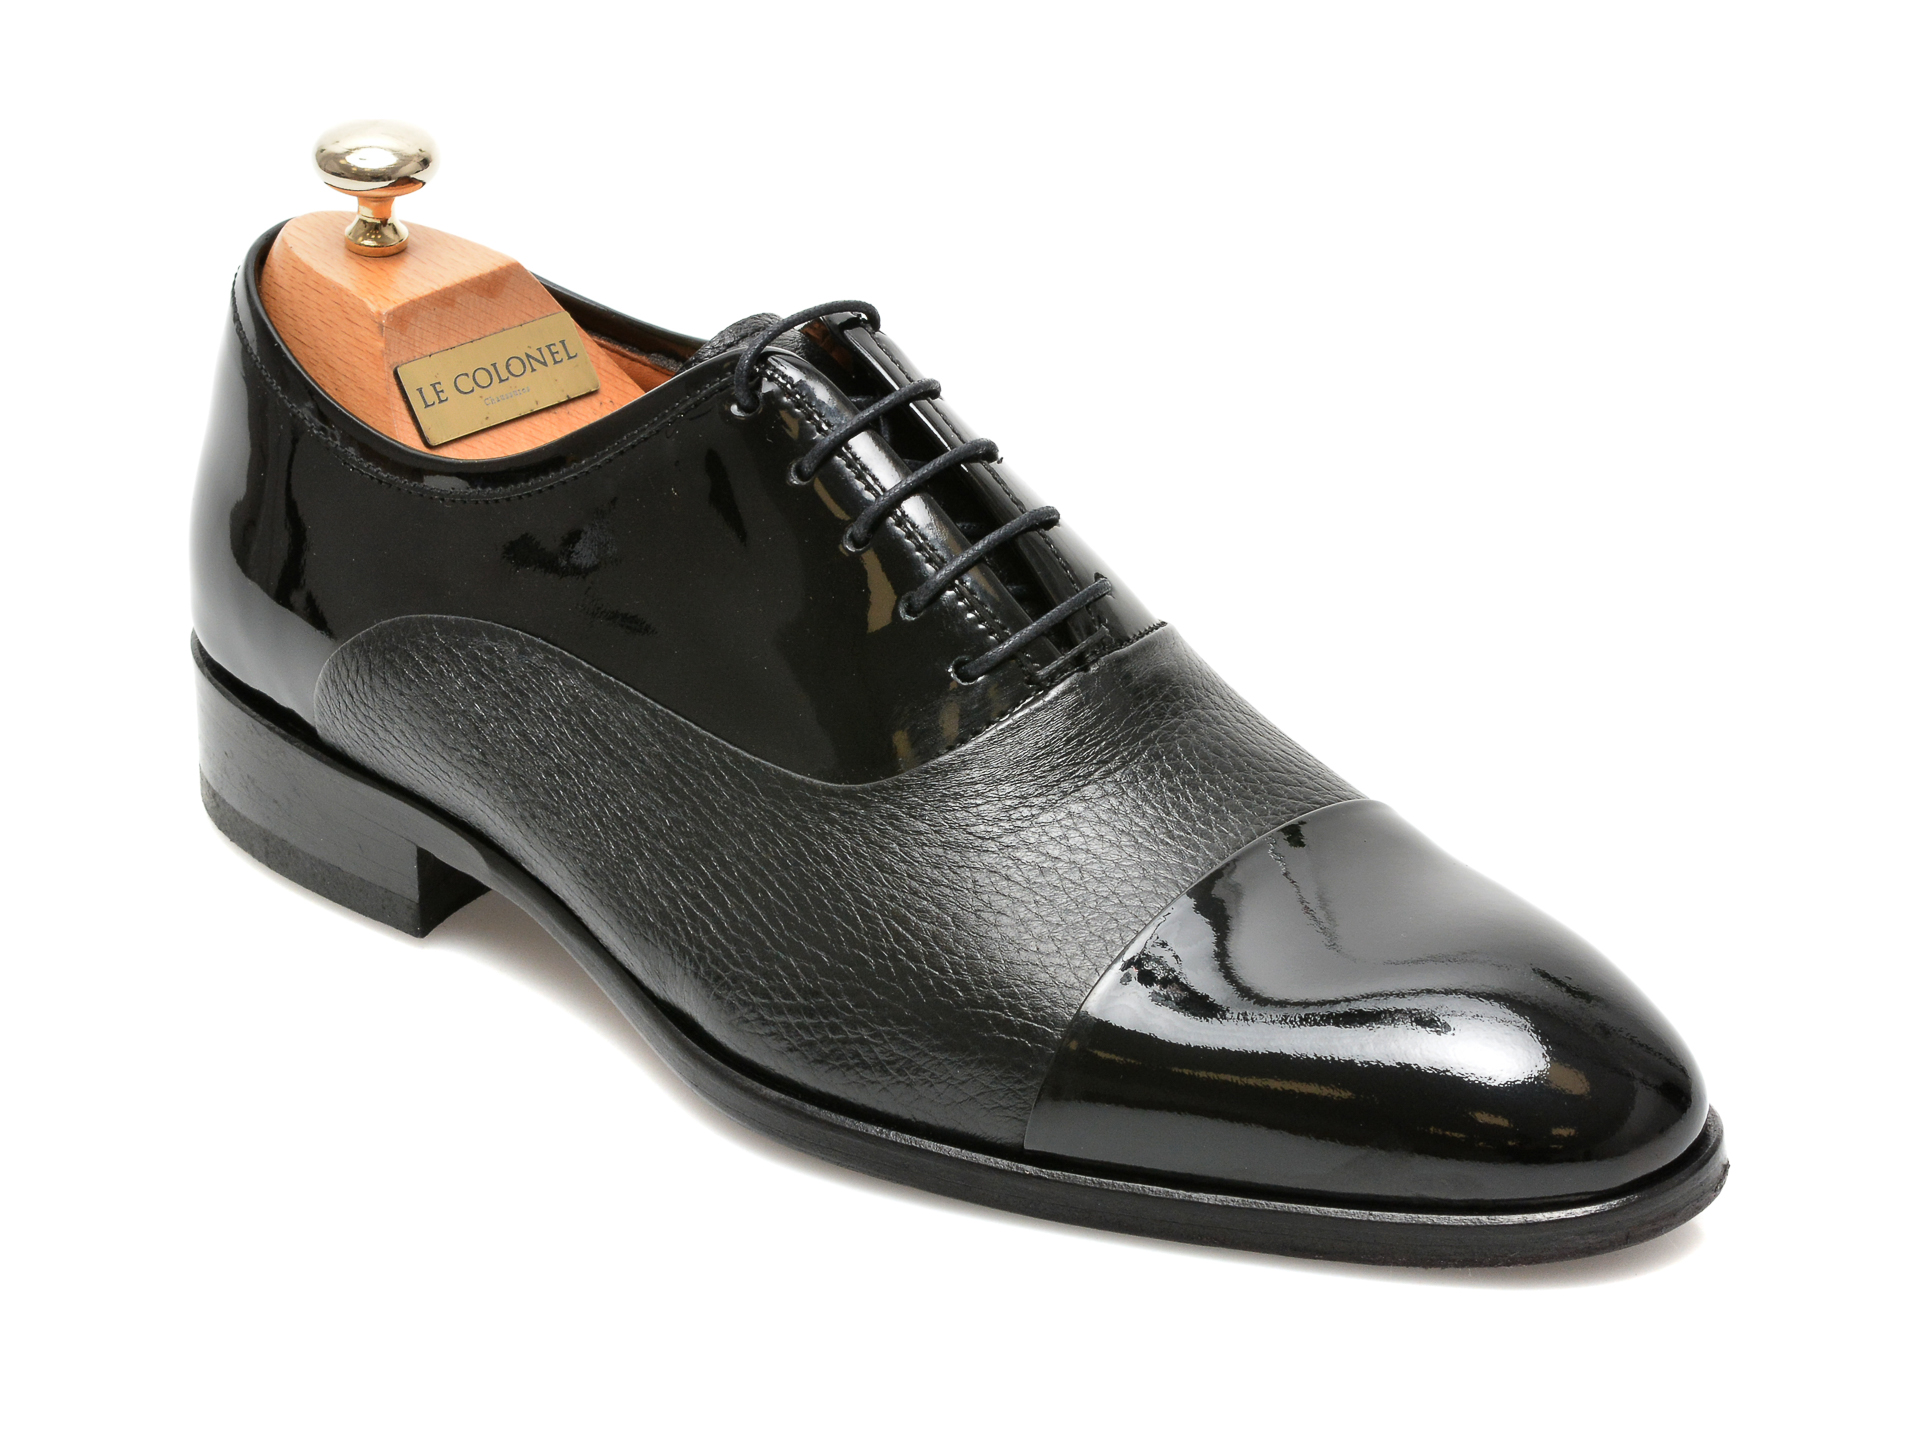 Pantofi LE COLONEL negri, 327117, din piele naturala lacuita /barbati/pantofi